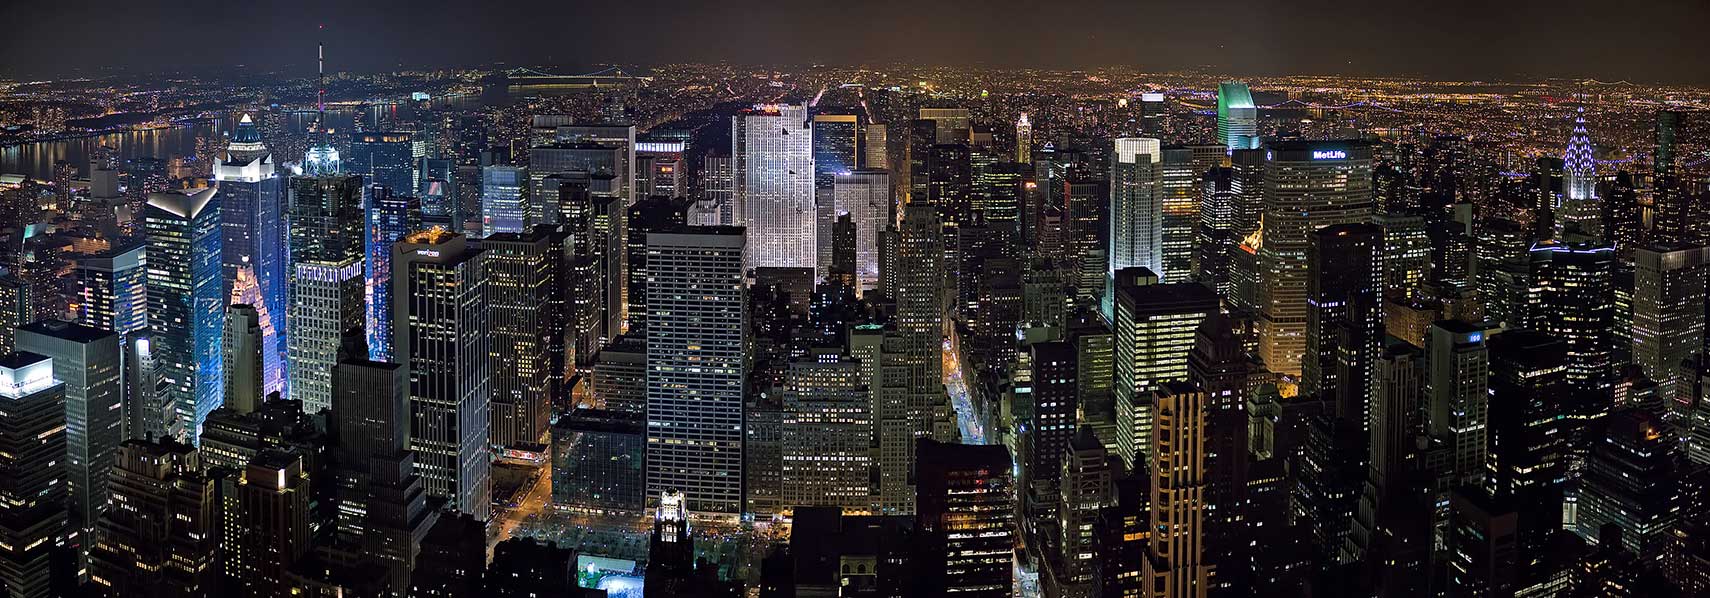 New York City Midtown, Manhattan at night